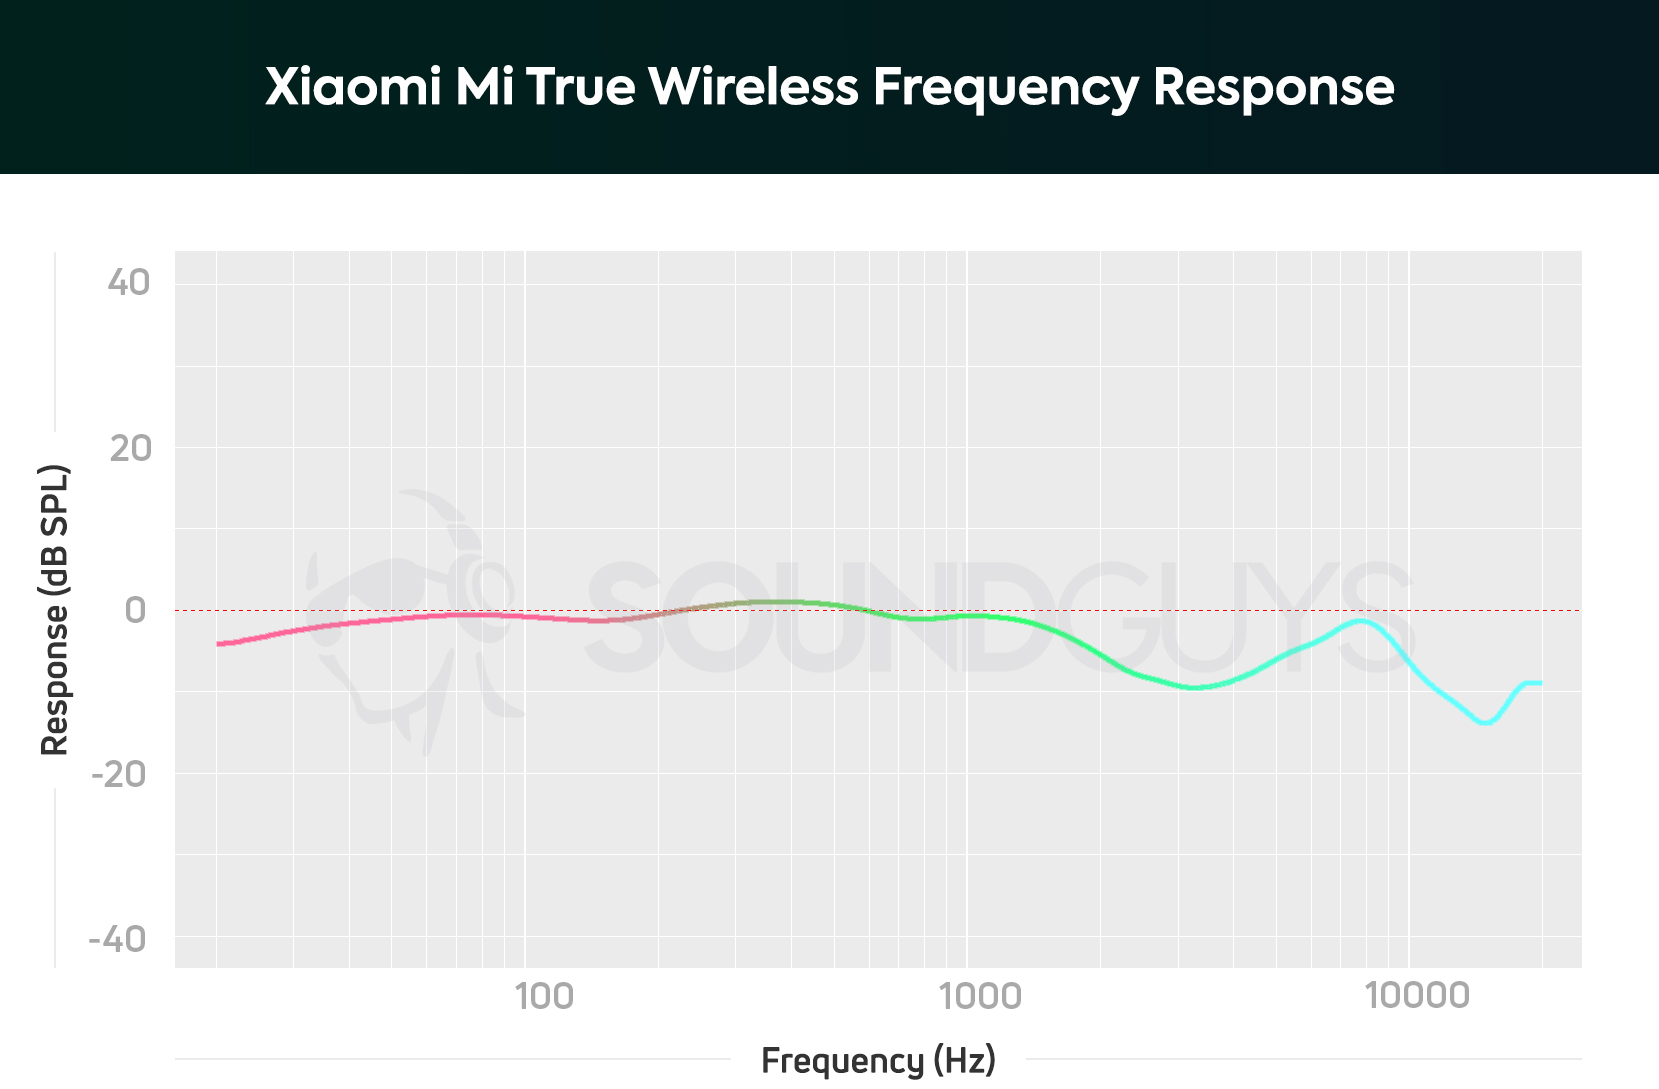 Xiaomi Mi True Wireless earbuds frequency response chart.